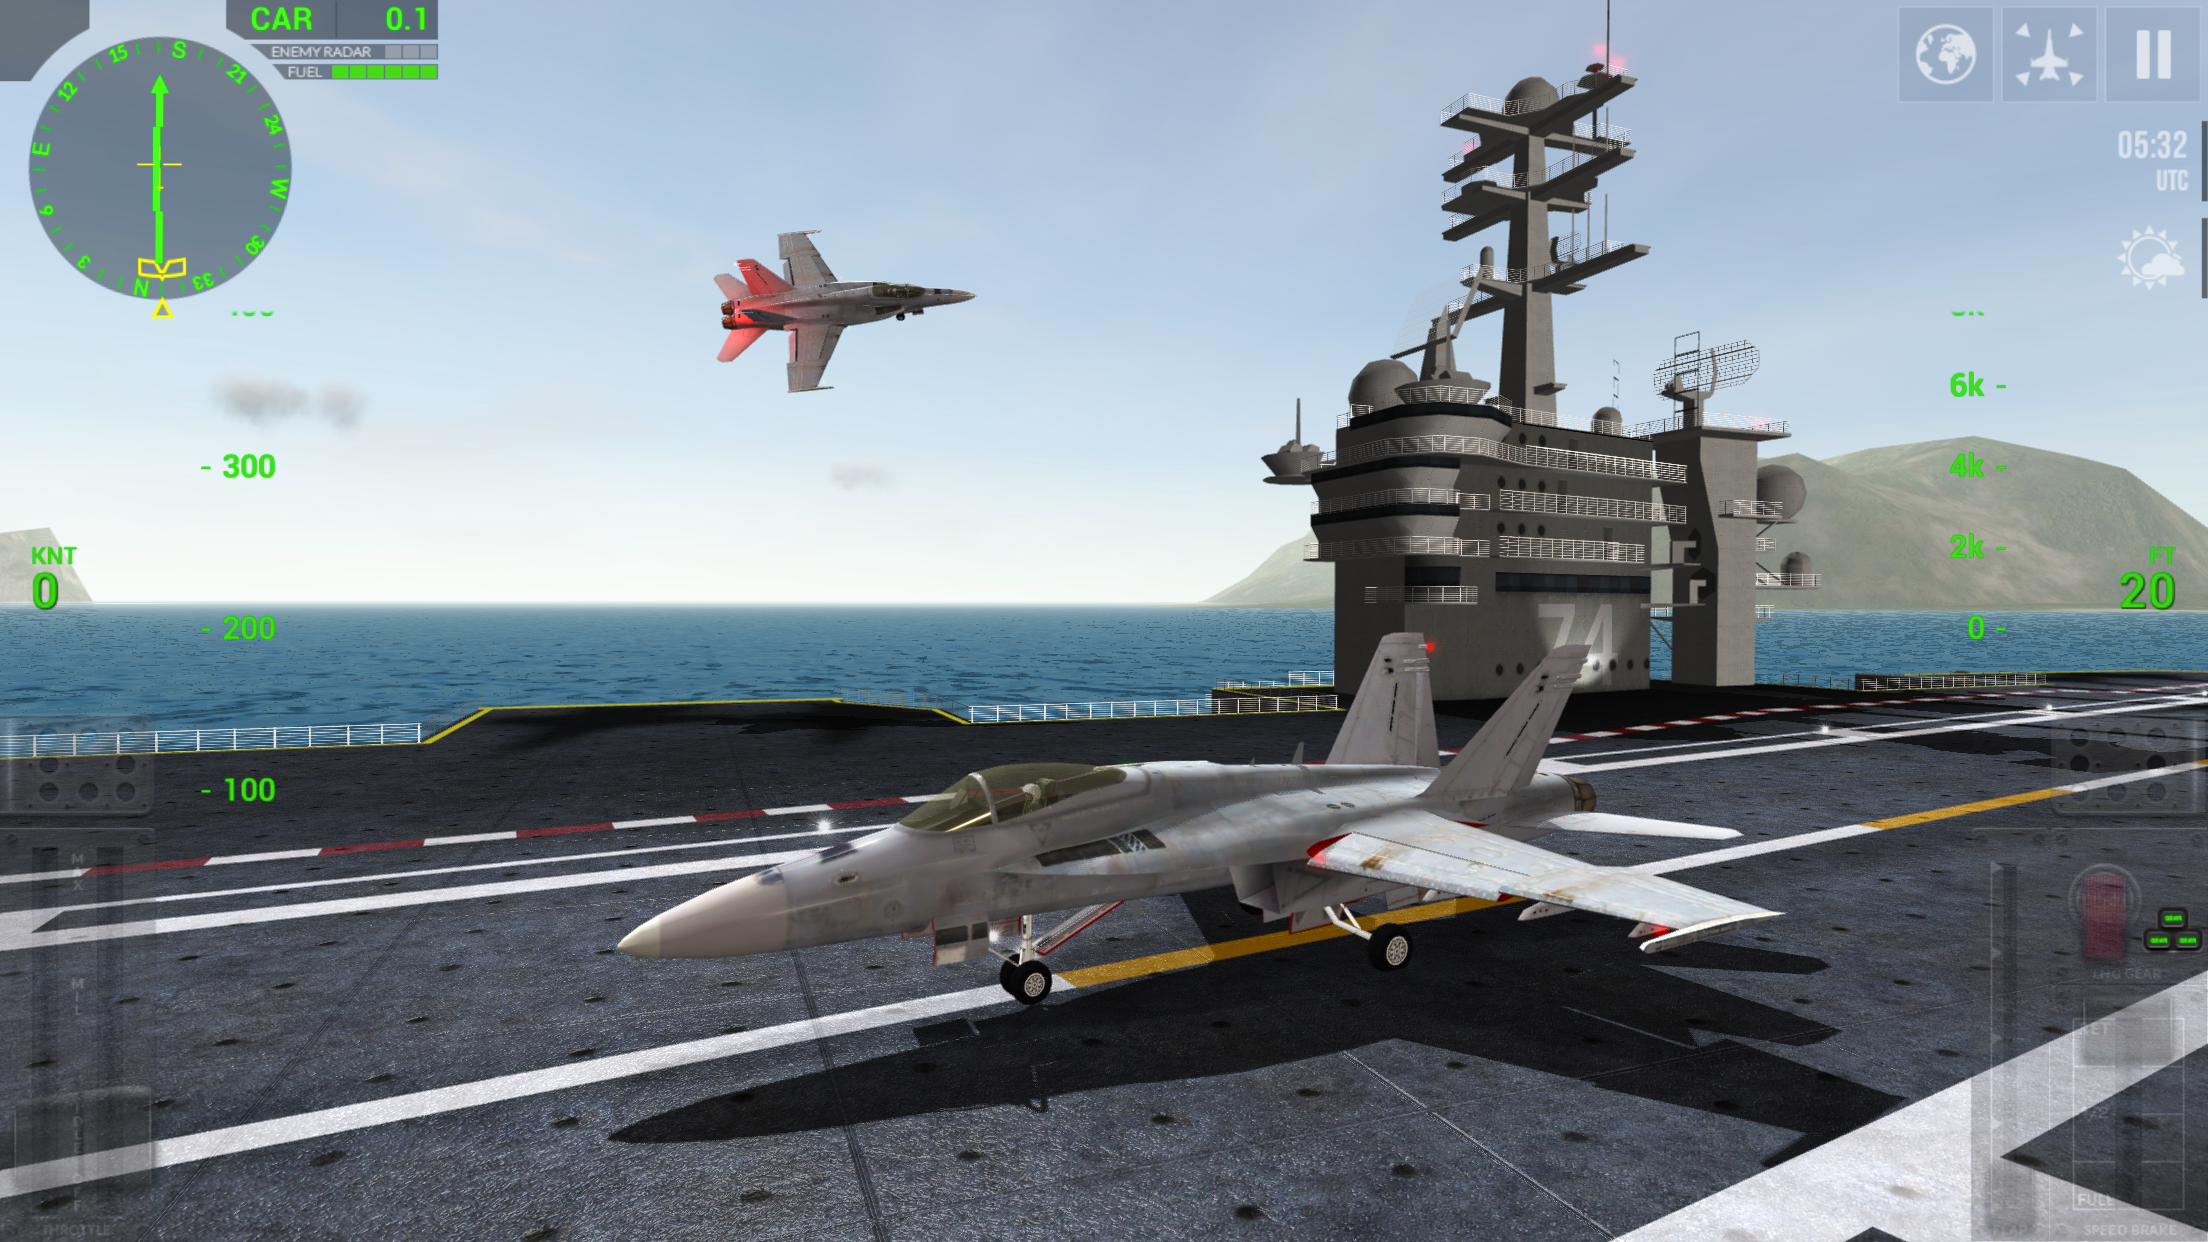 Screenshot 1 of F18 Carrier ဆင်းသက်ခြင်း။ 